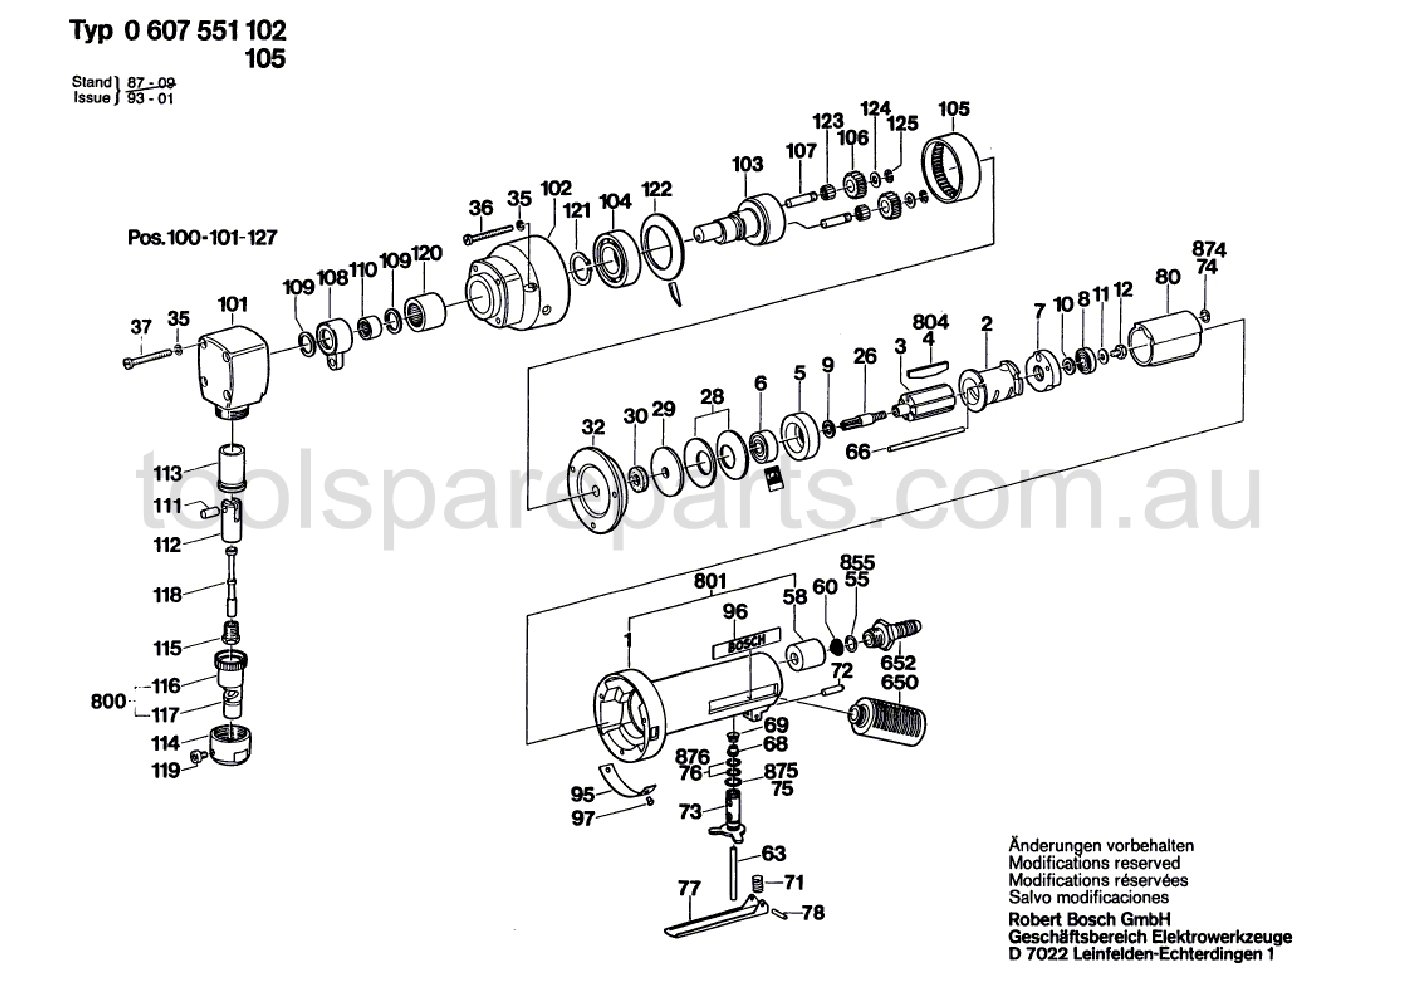 Bosch 370 WATT-SERIE 0607551102  Diagram 1